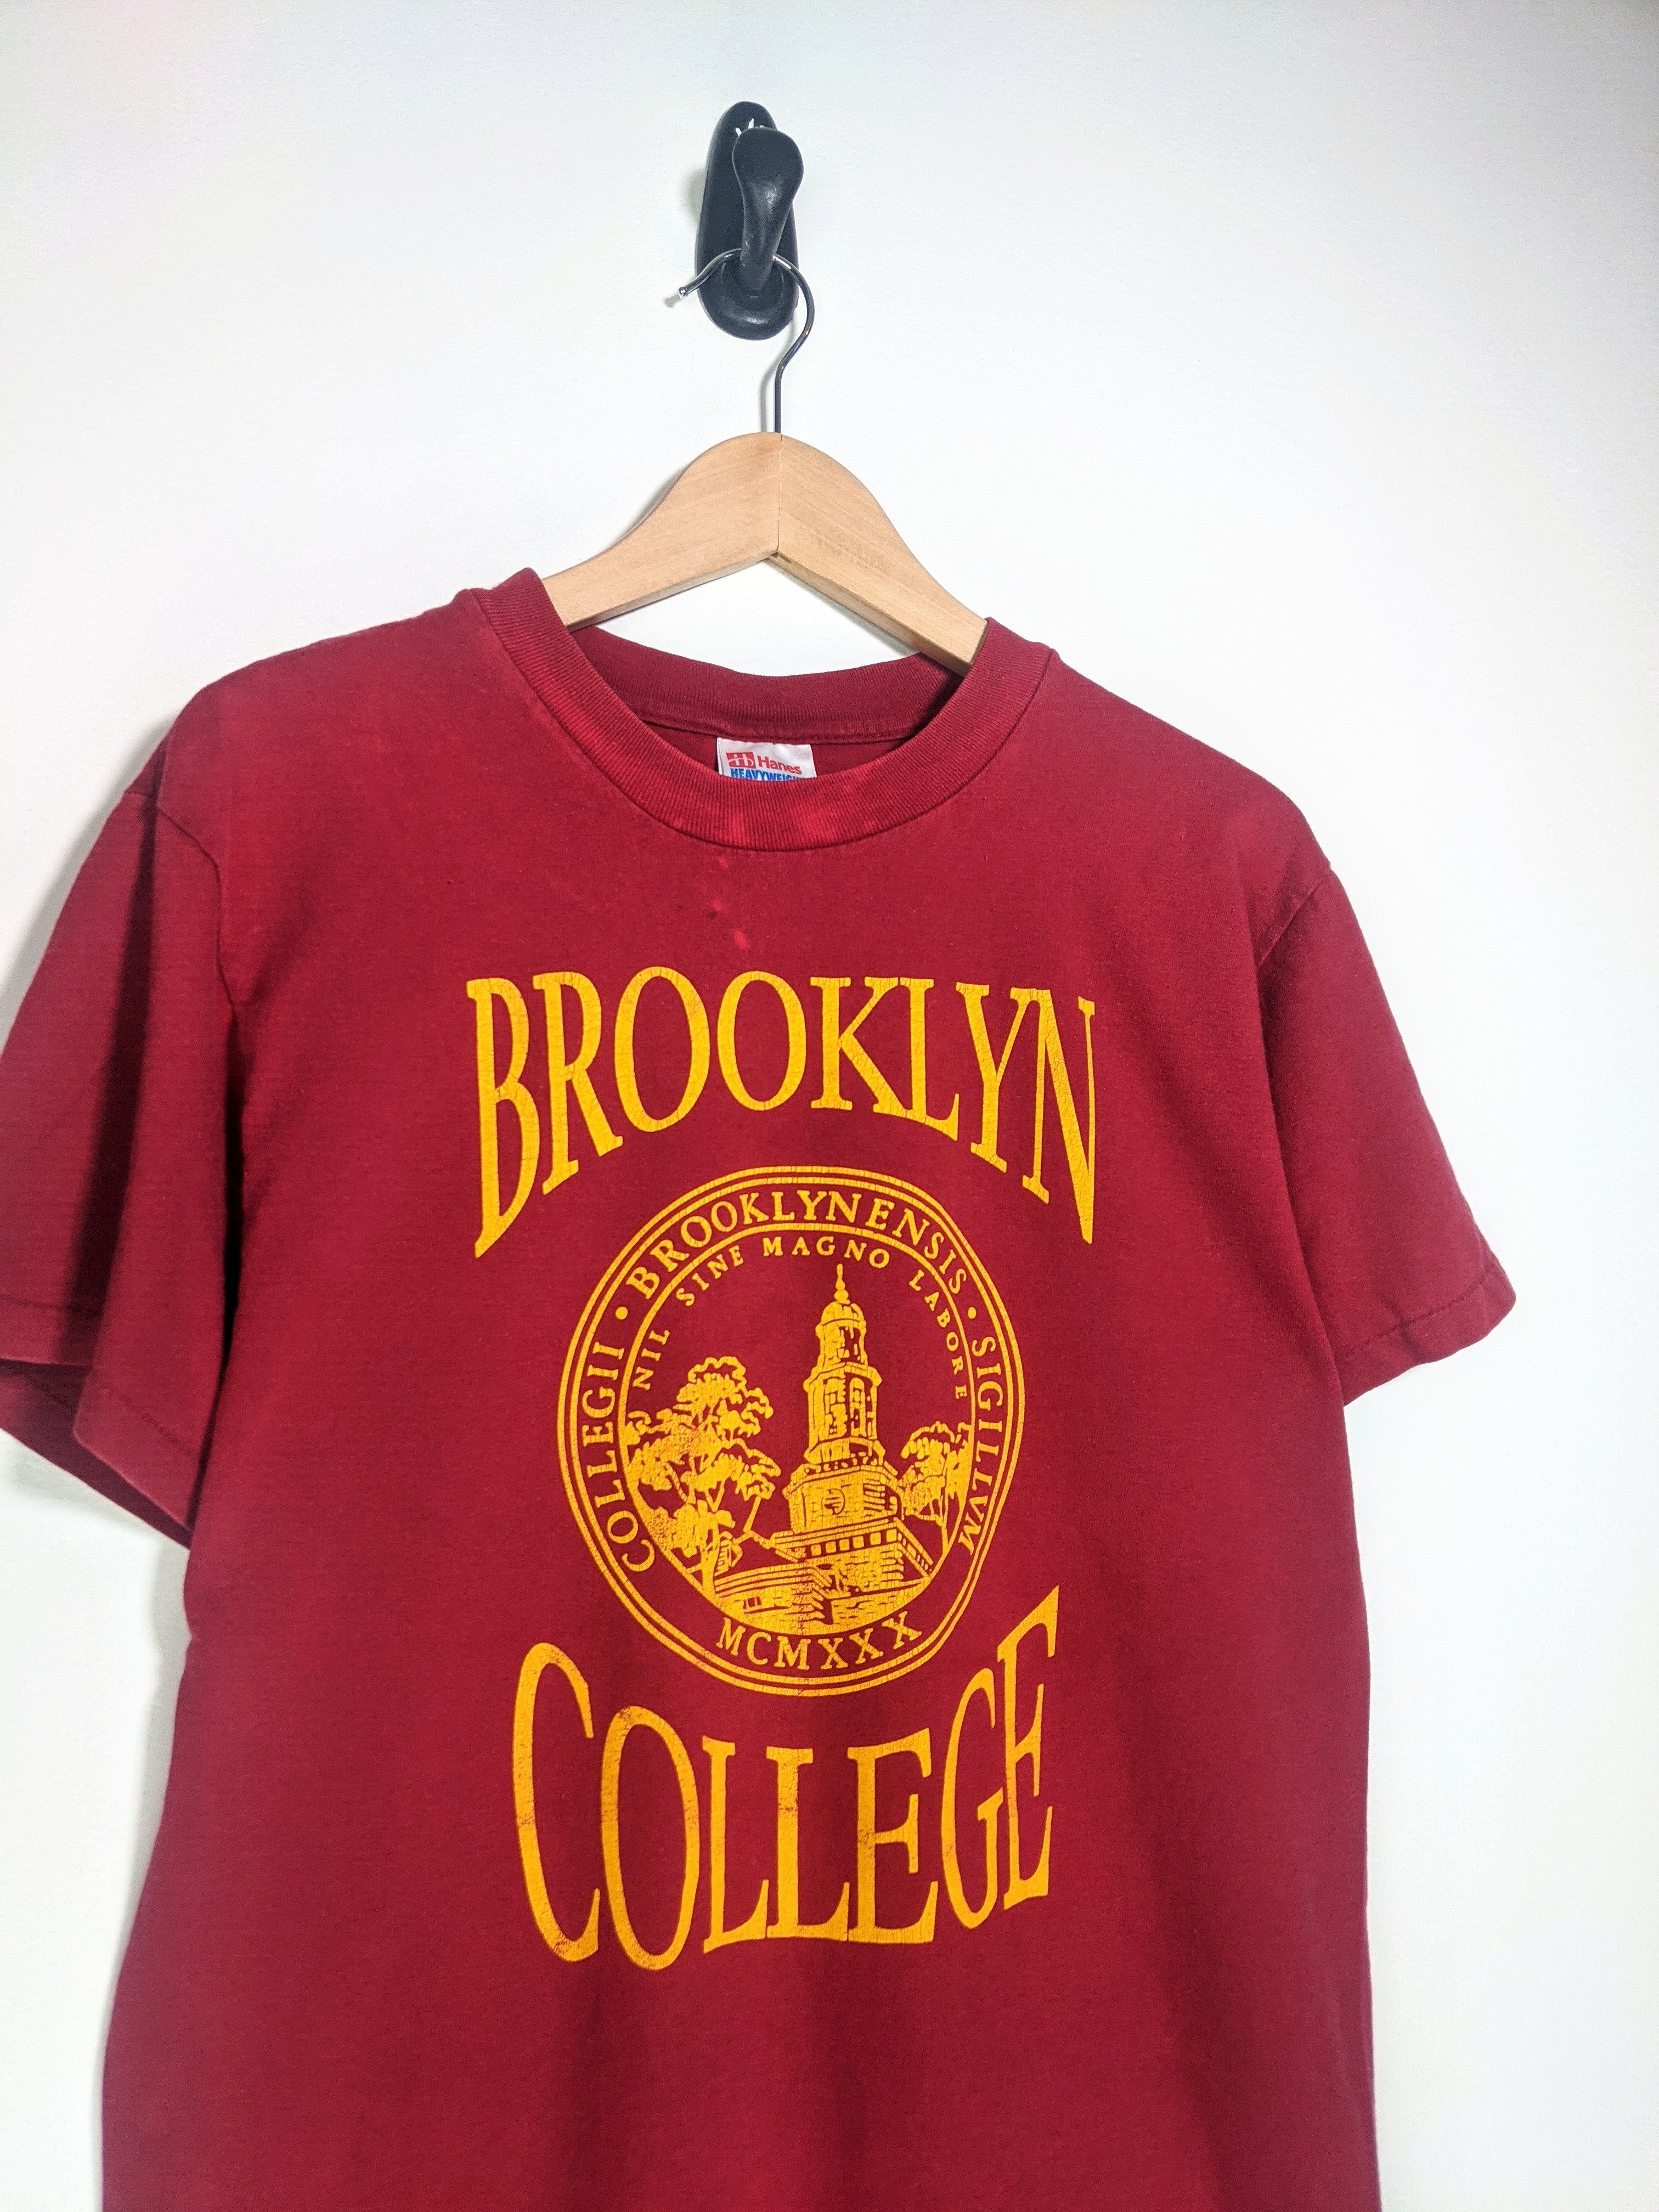 Brooklyn College Tee (M)